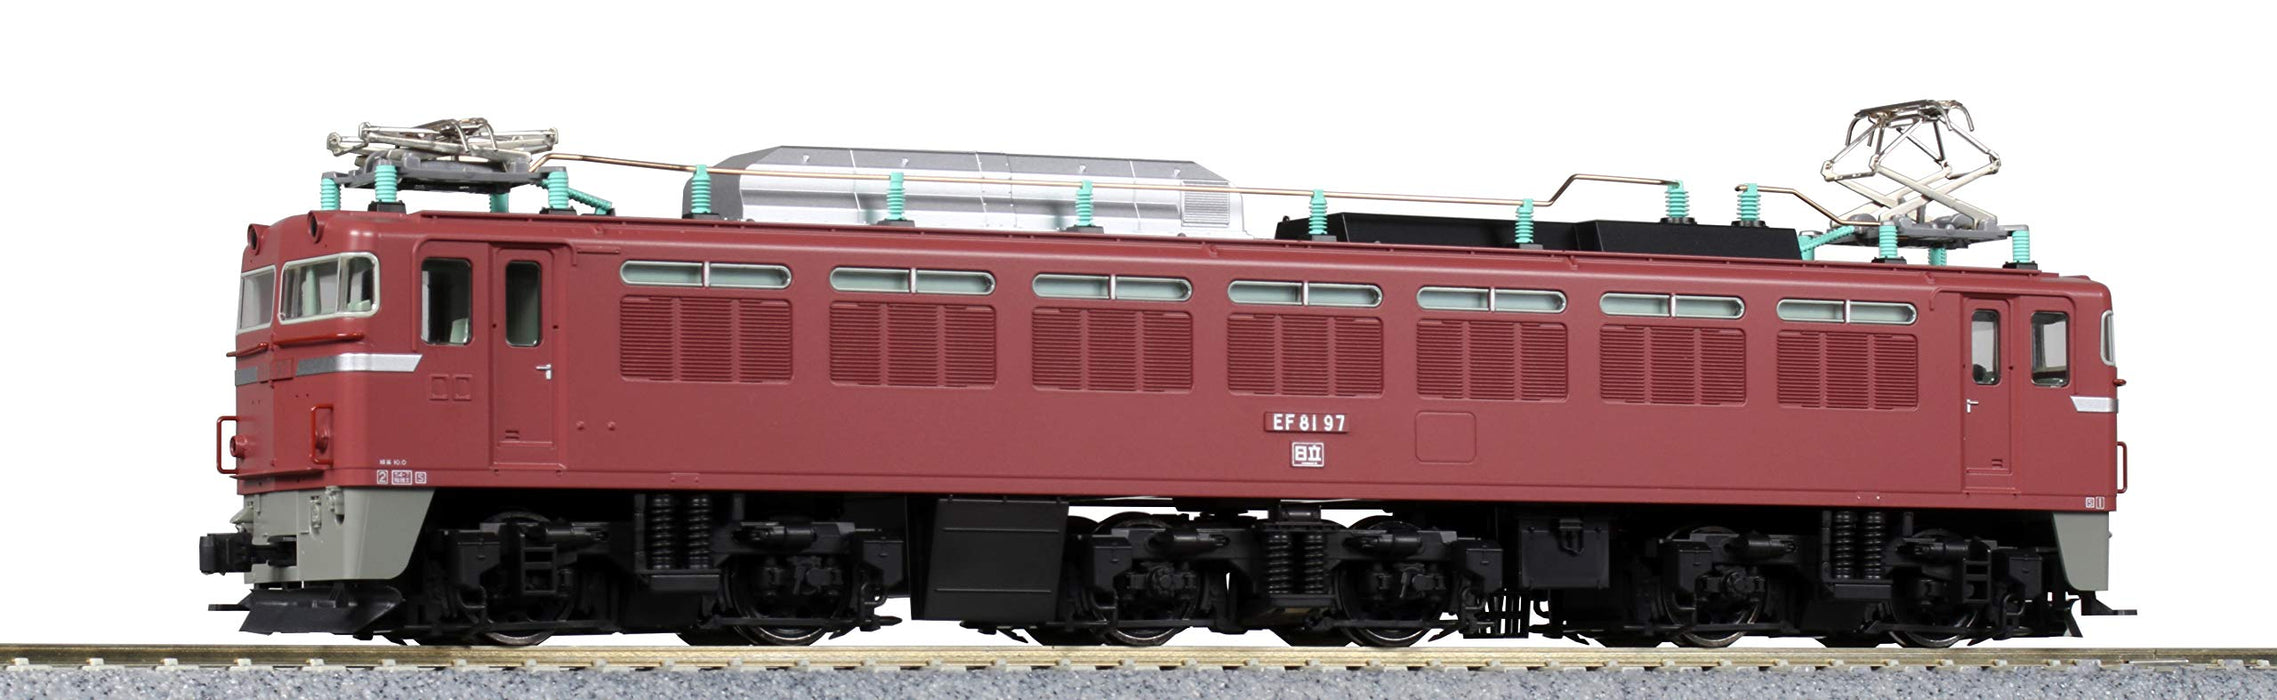 Kato 1-320 Ho Gauge Electric Locomotive Model - General Color Ef81 Railway